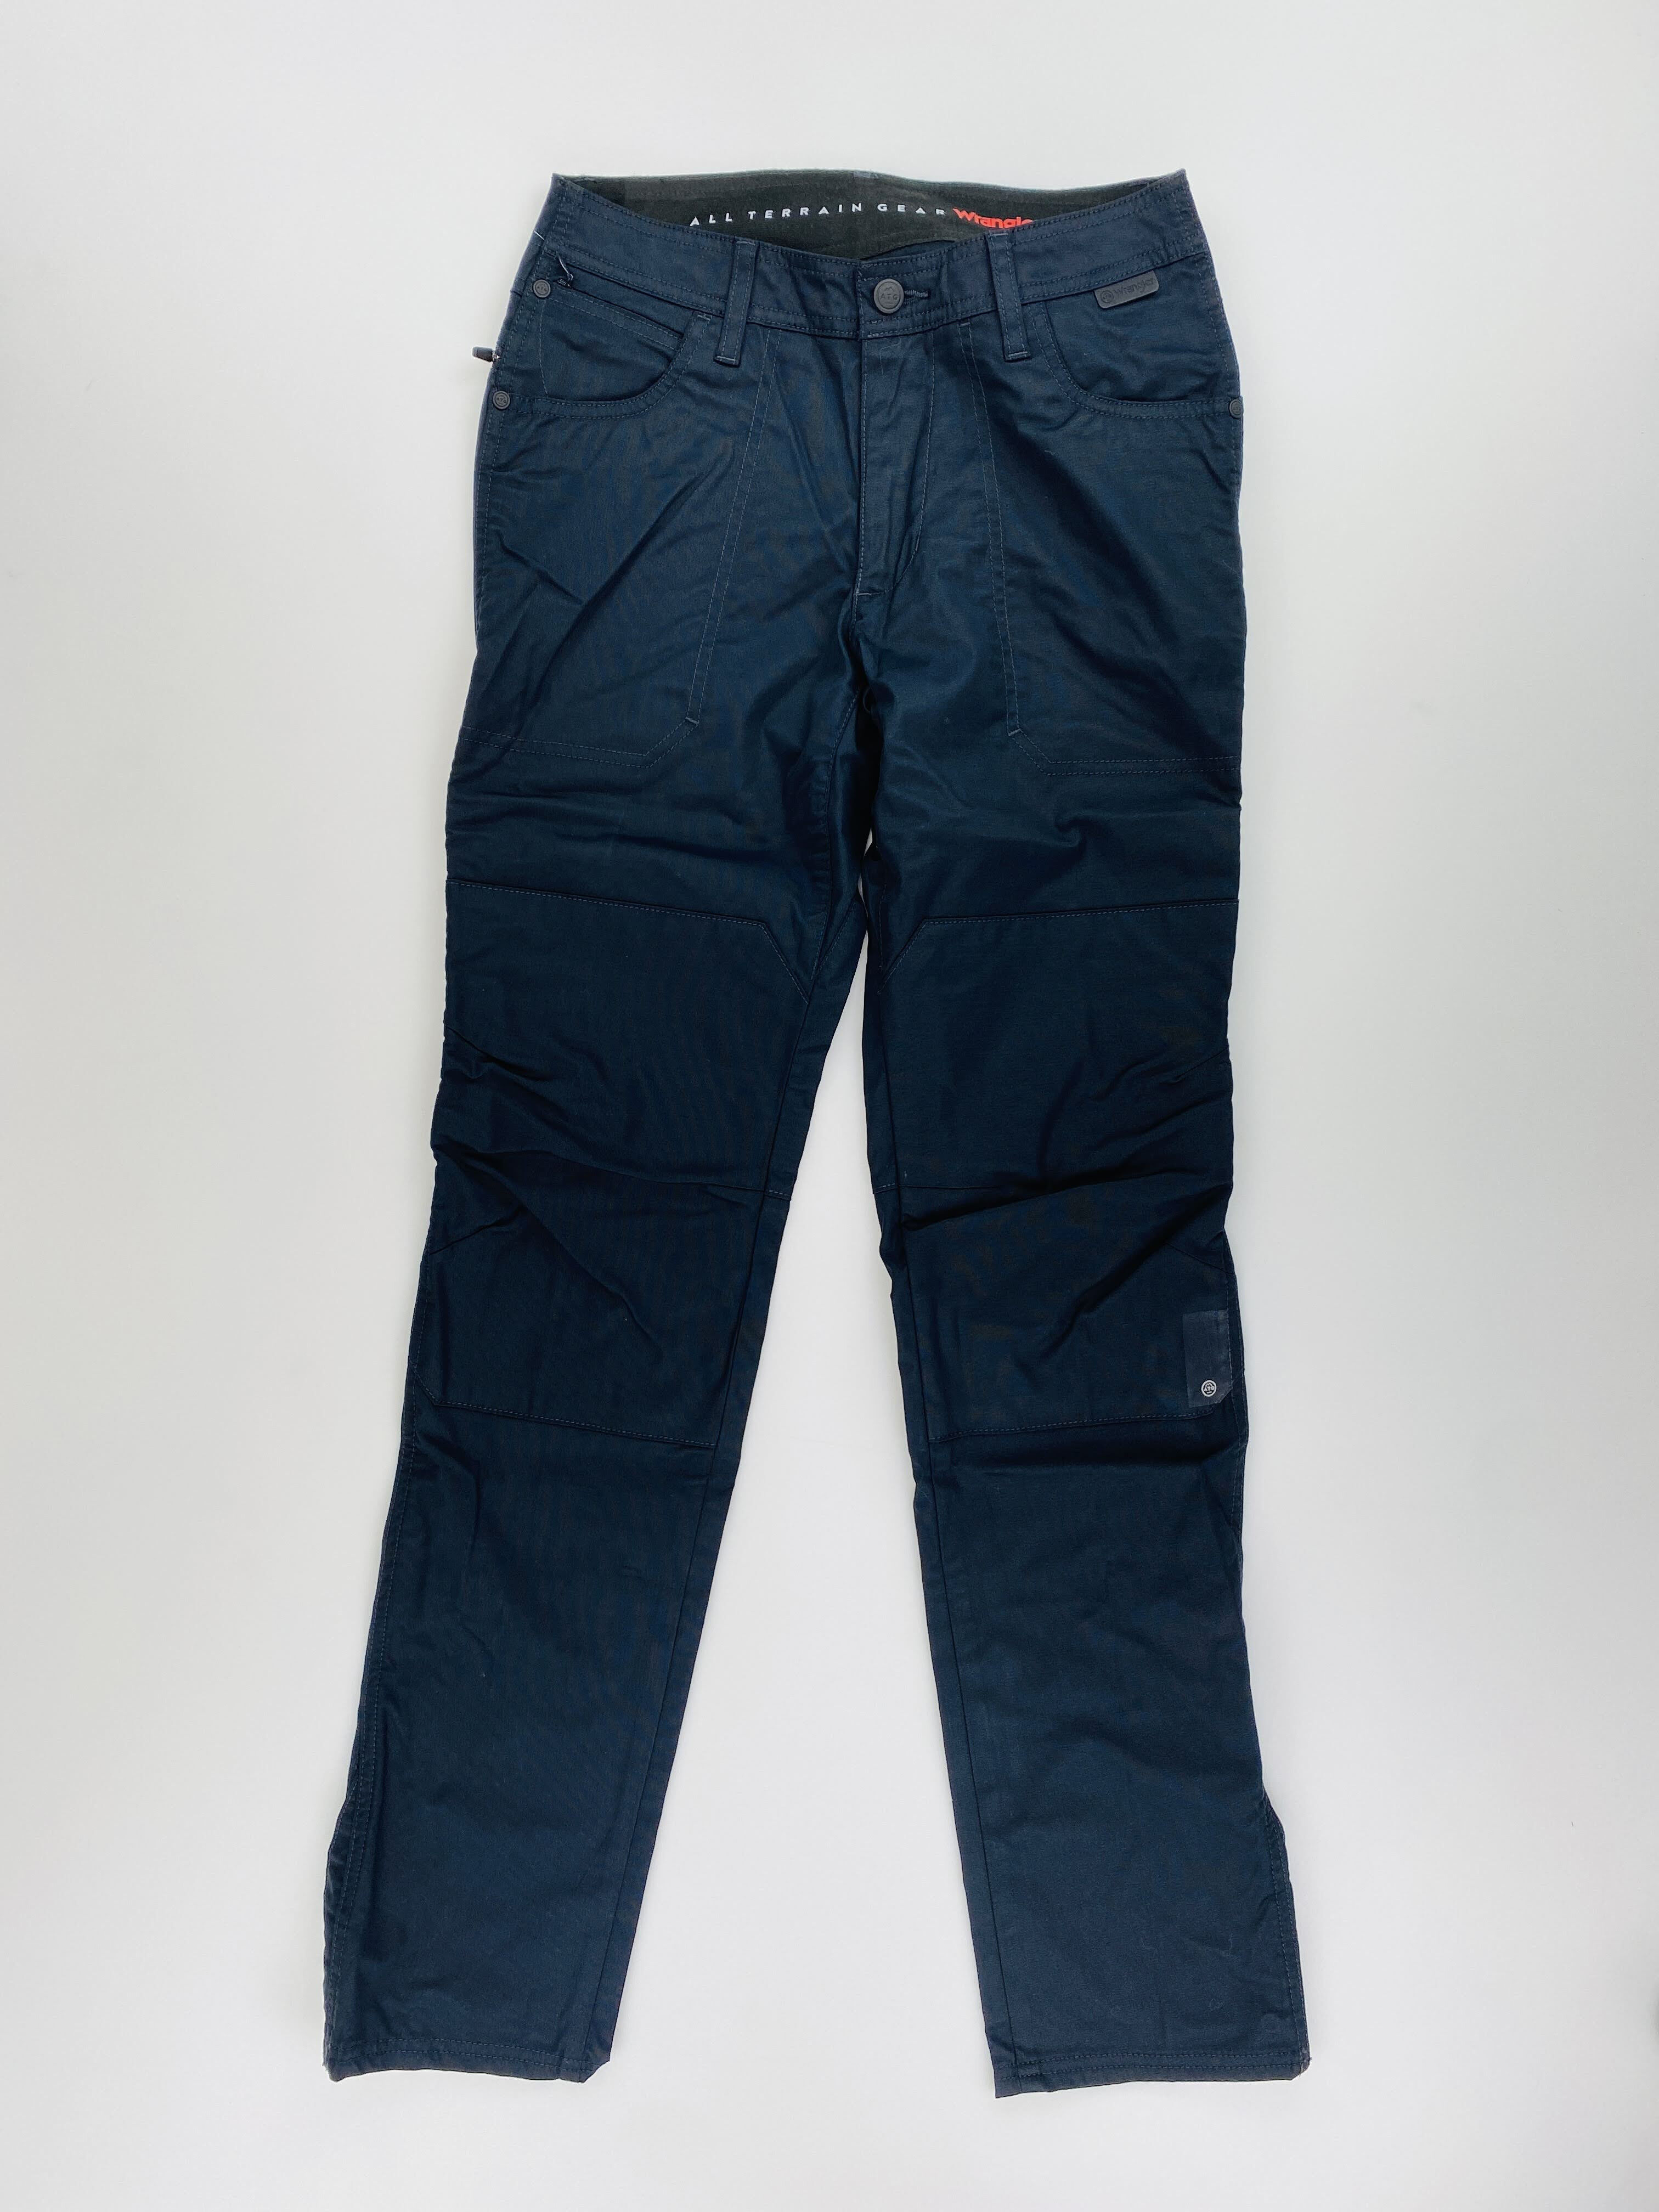 Wrangler Reinforced Softshell Pant - Second Hand Walking trousers - Women's - Noir - US 28 | Hardloop